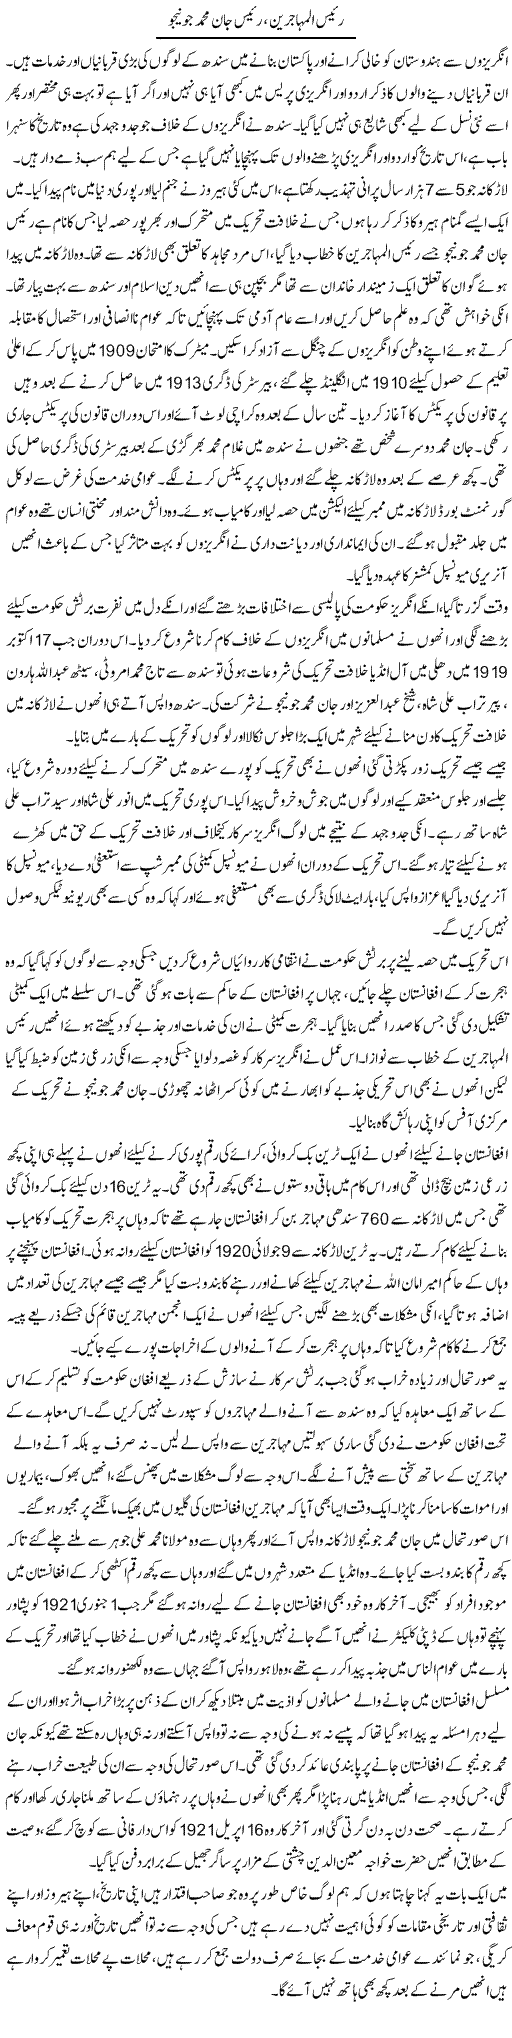 Raees Ul Muhajireen, Raees Jan Muhammad Junejo | Liaqat Rajpar | Daily Urdu Columns